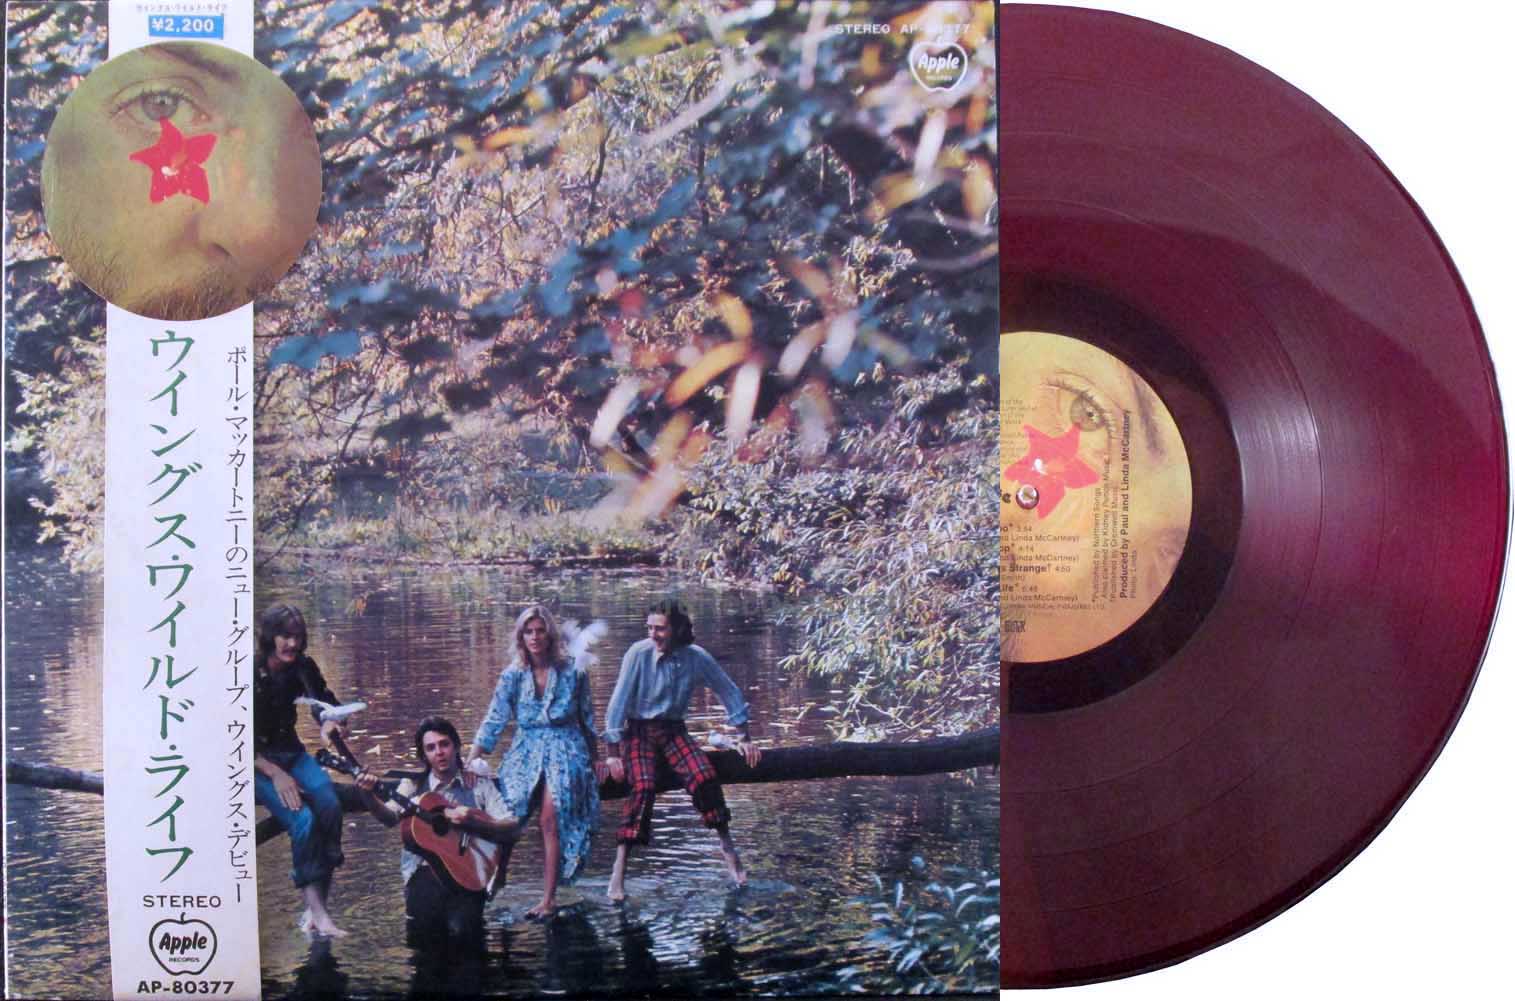 Paul McCartney & Wings - Wild Life red vinyl Japan LP with obi